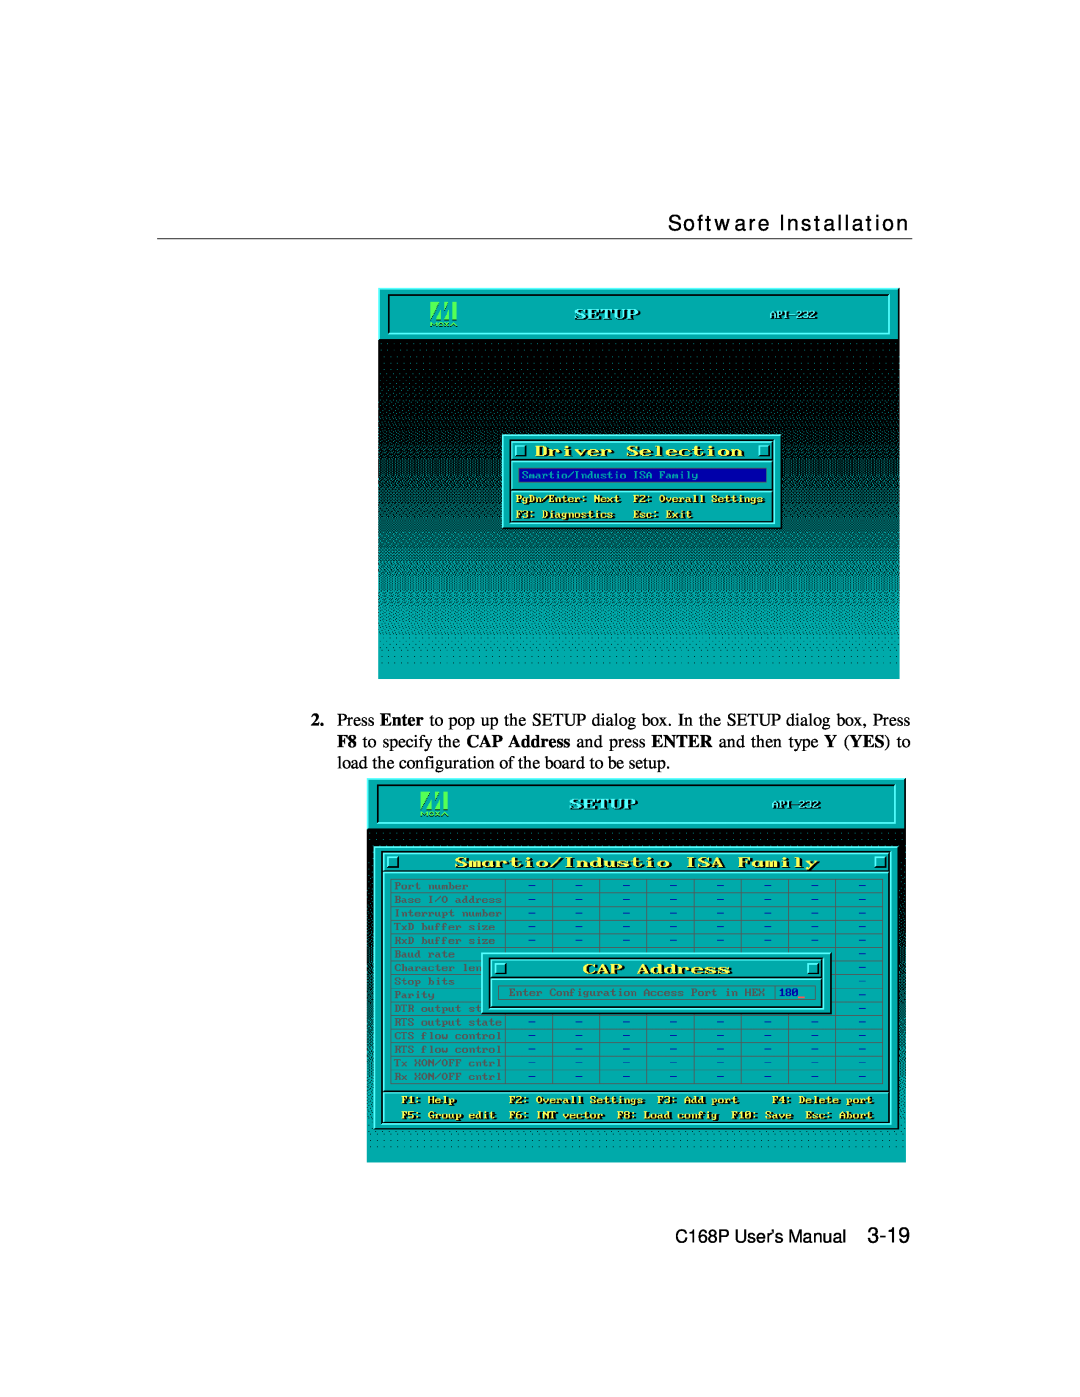 Moxa Technologies user manual Software Installation, C168P User’s Manual 